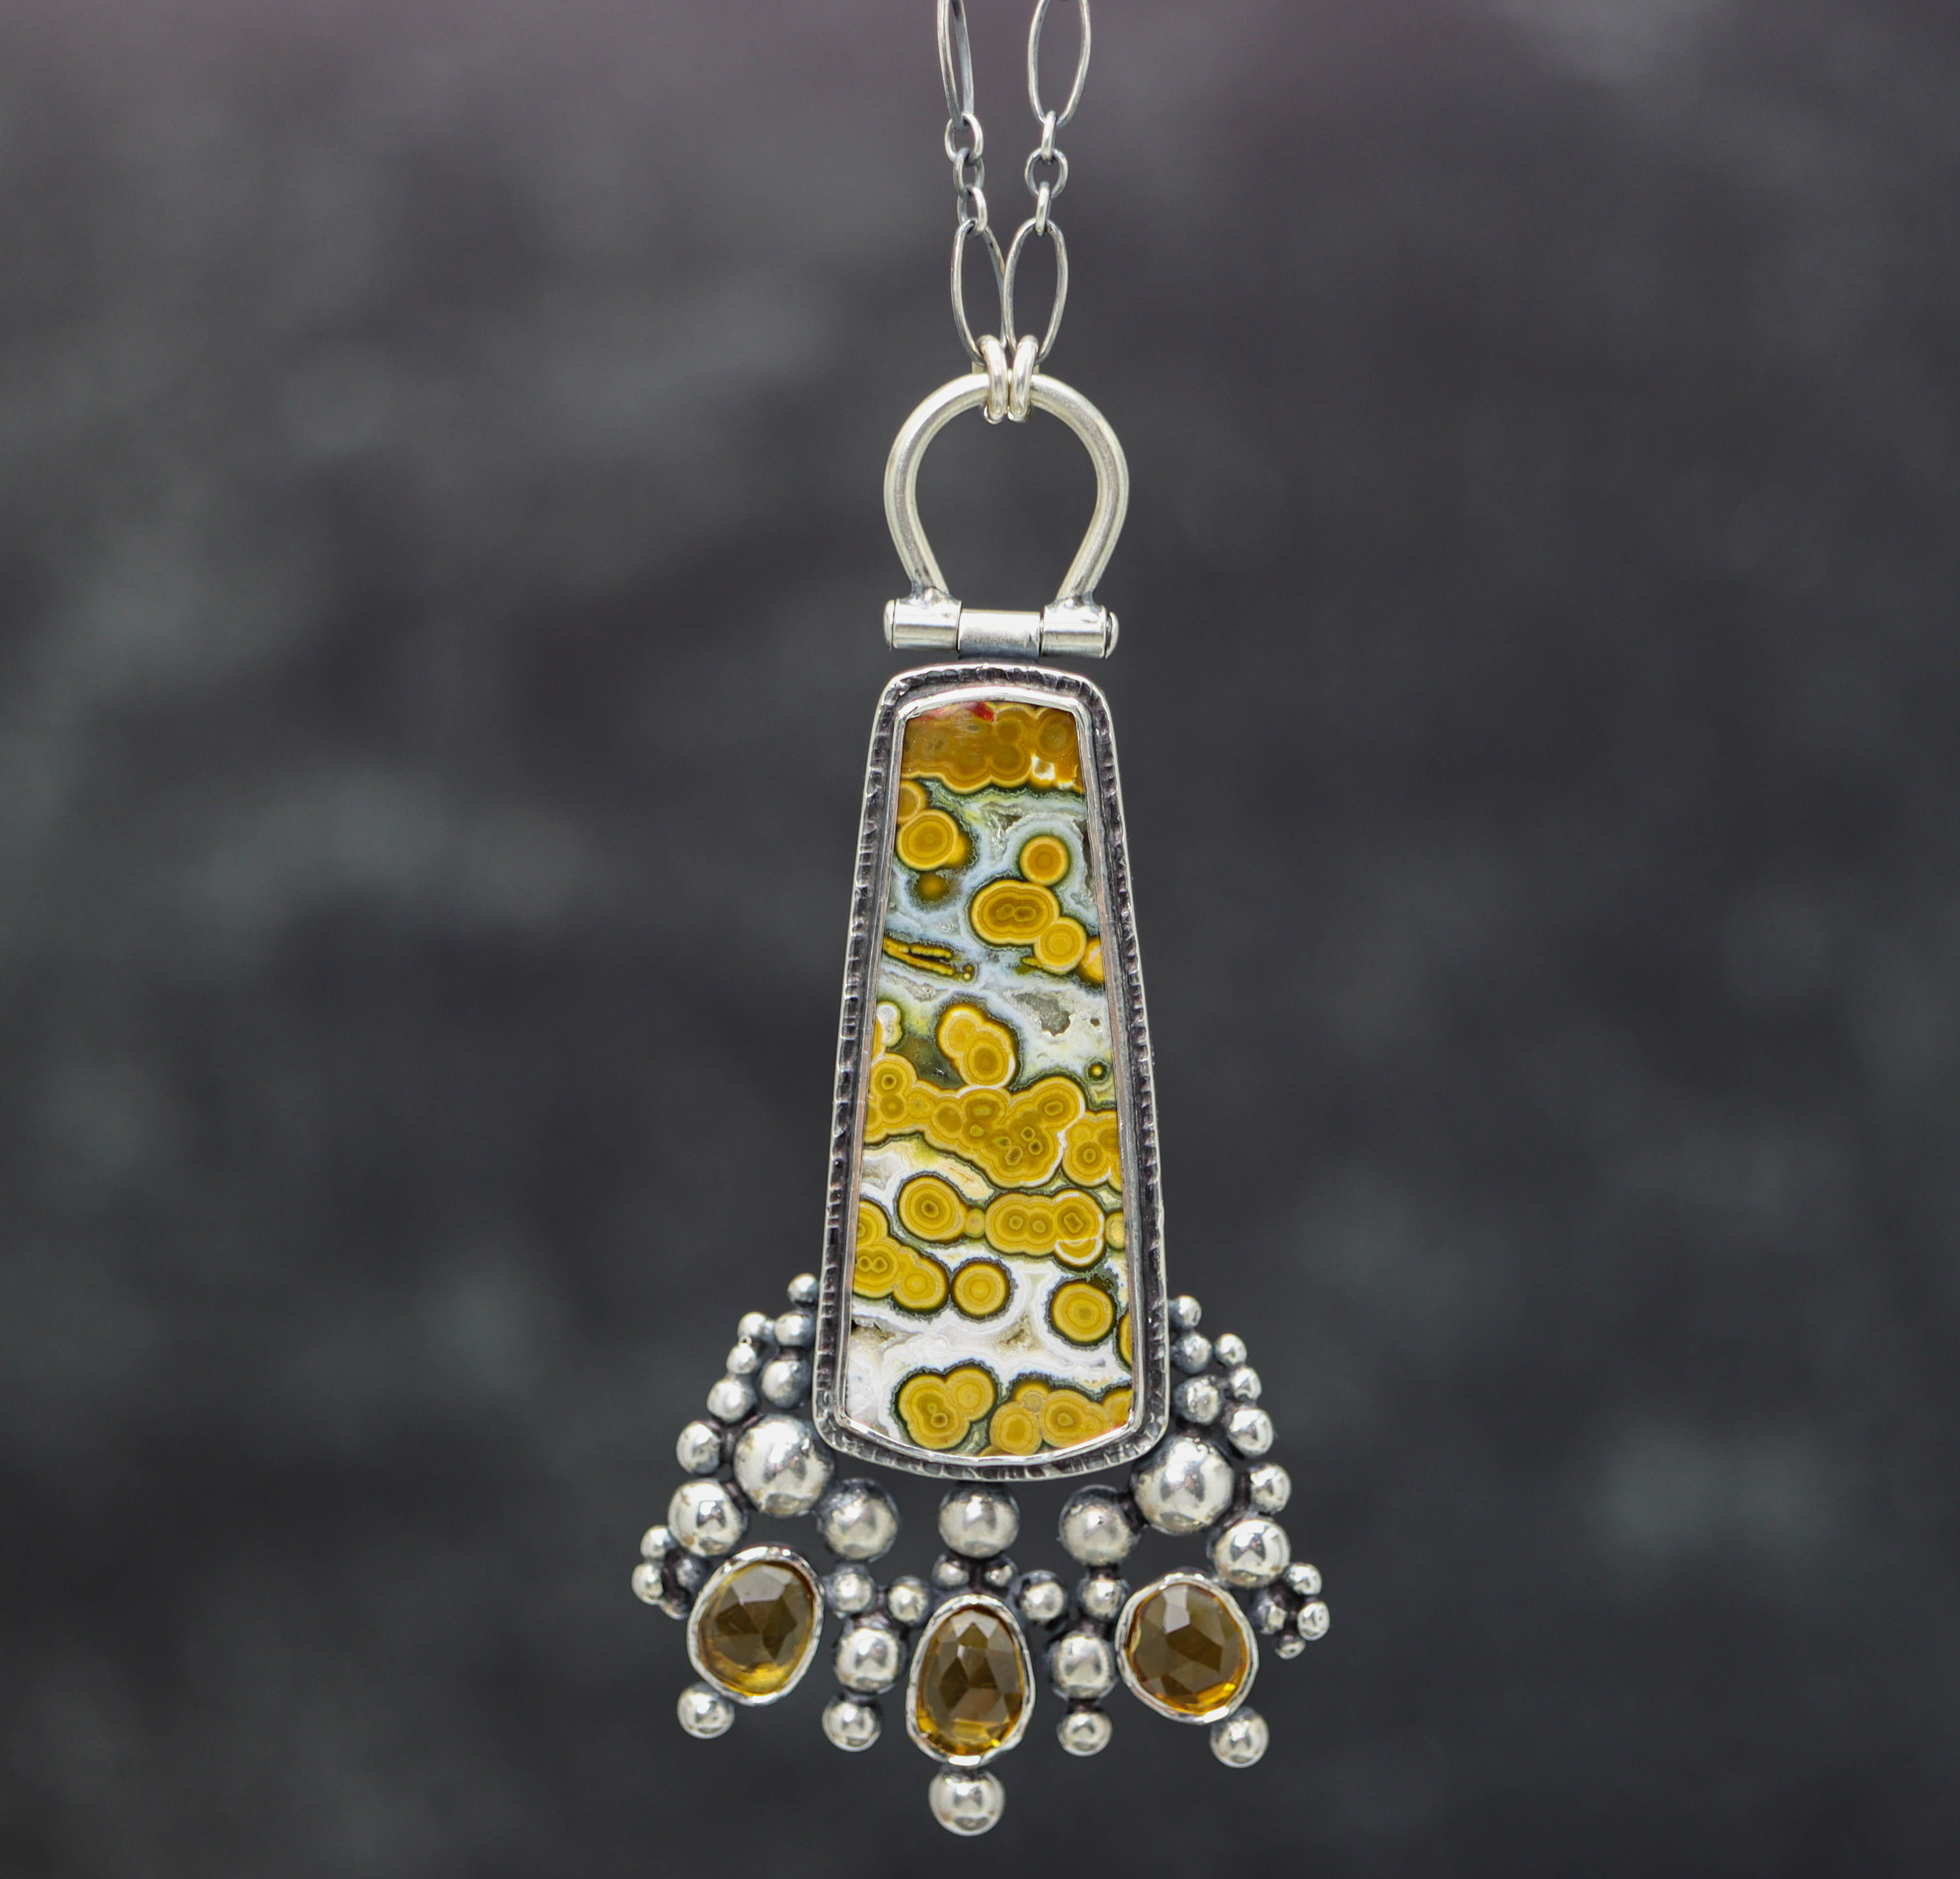 Orbicular Jasper and Mandarine Citrine Pendant Necklace Sterling Silver